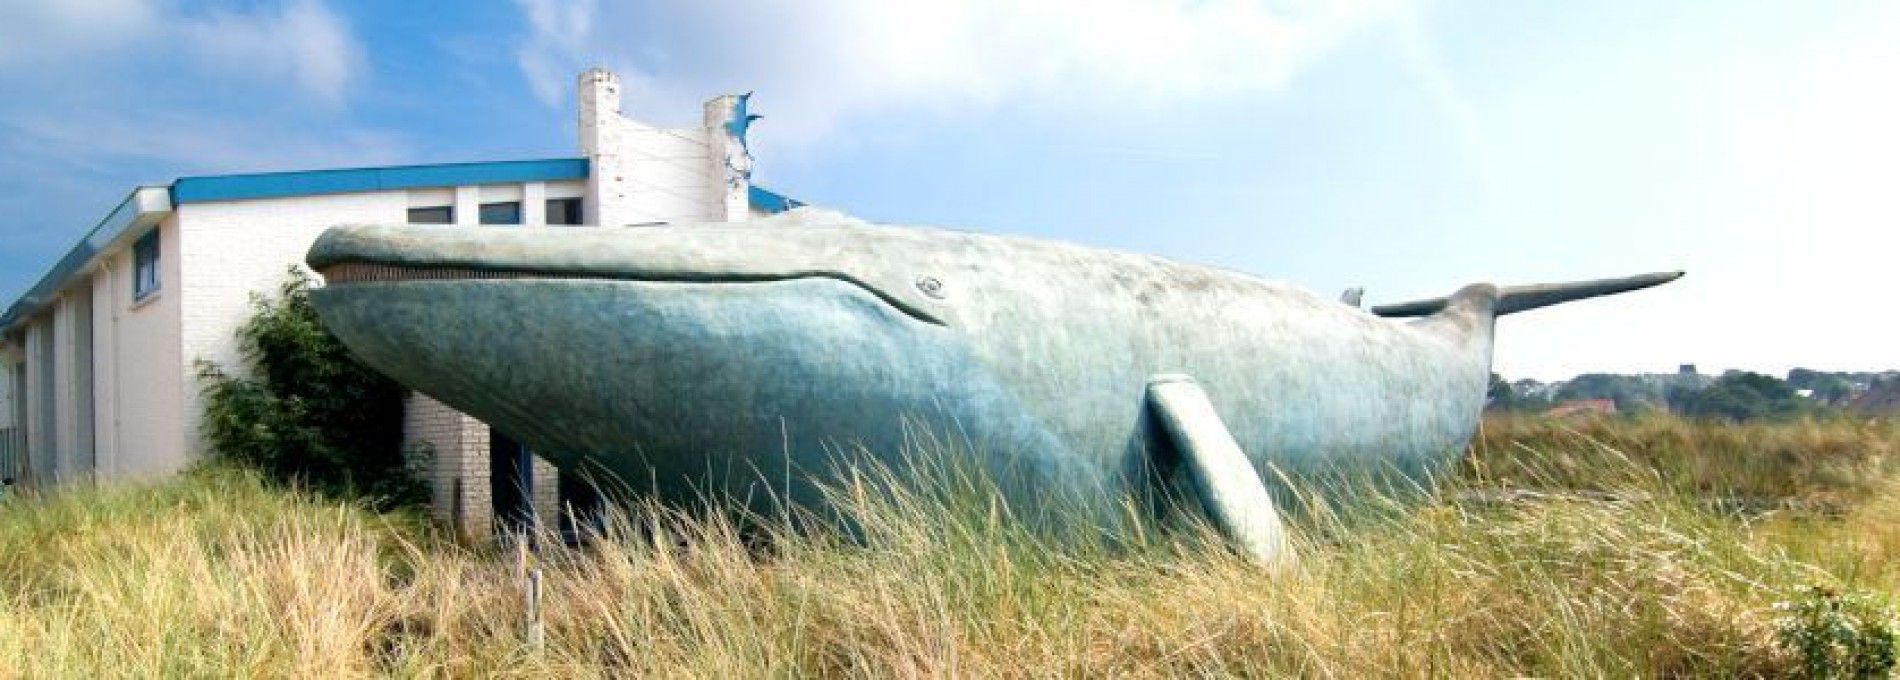 Whaling - Tourist Information Centre (VVV) Ameland